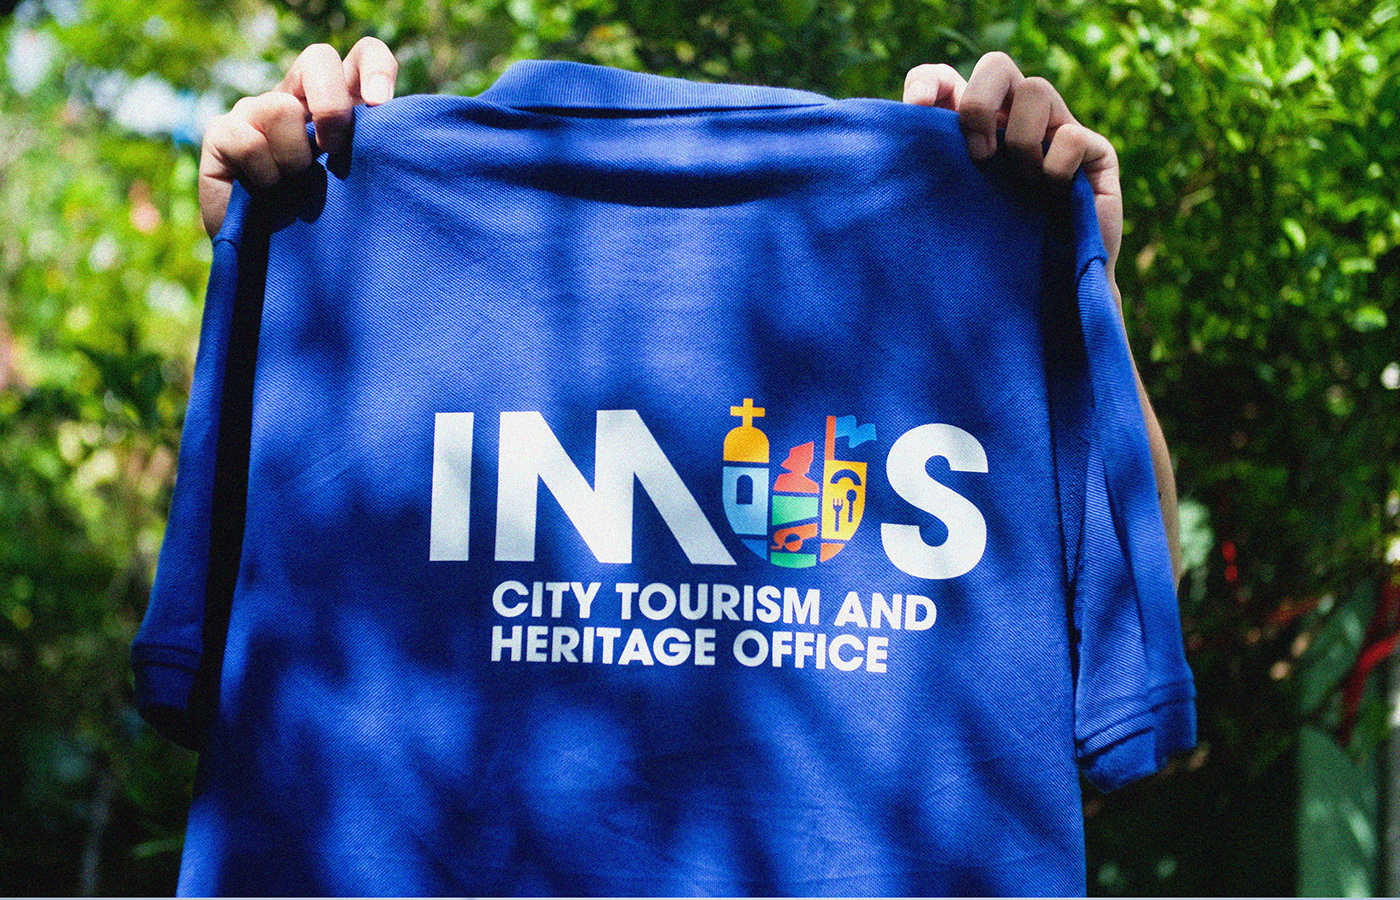 imus history cavite tourism culture katipunan philippines Flag Capital longganisang imus